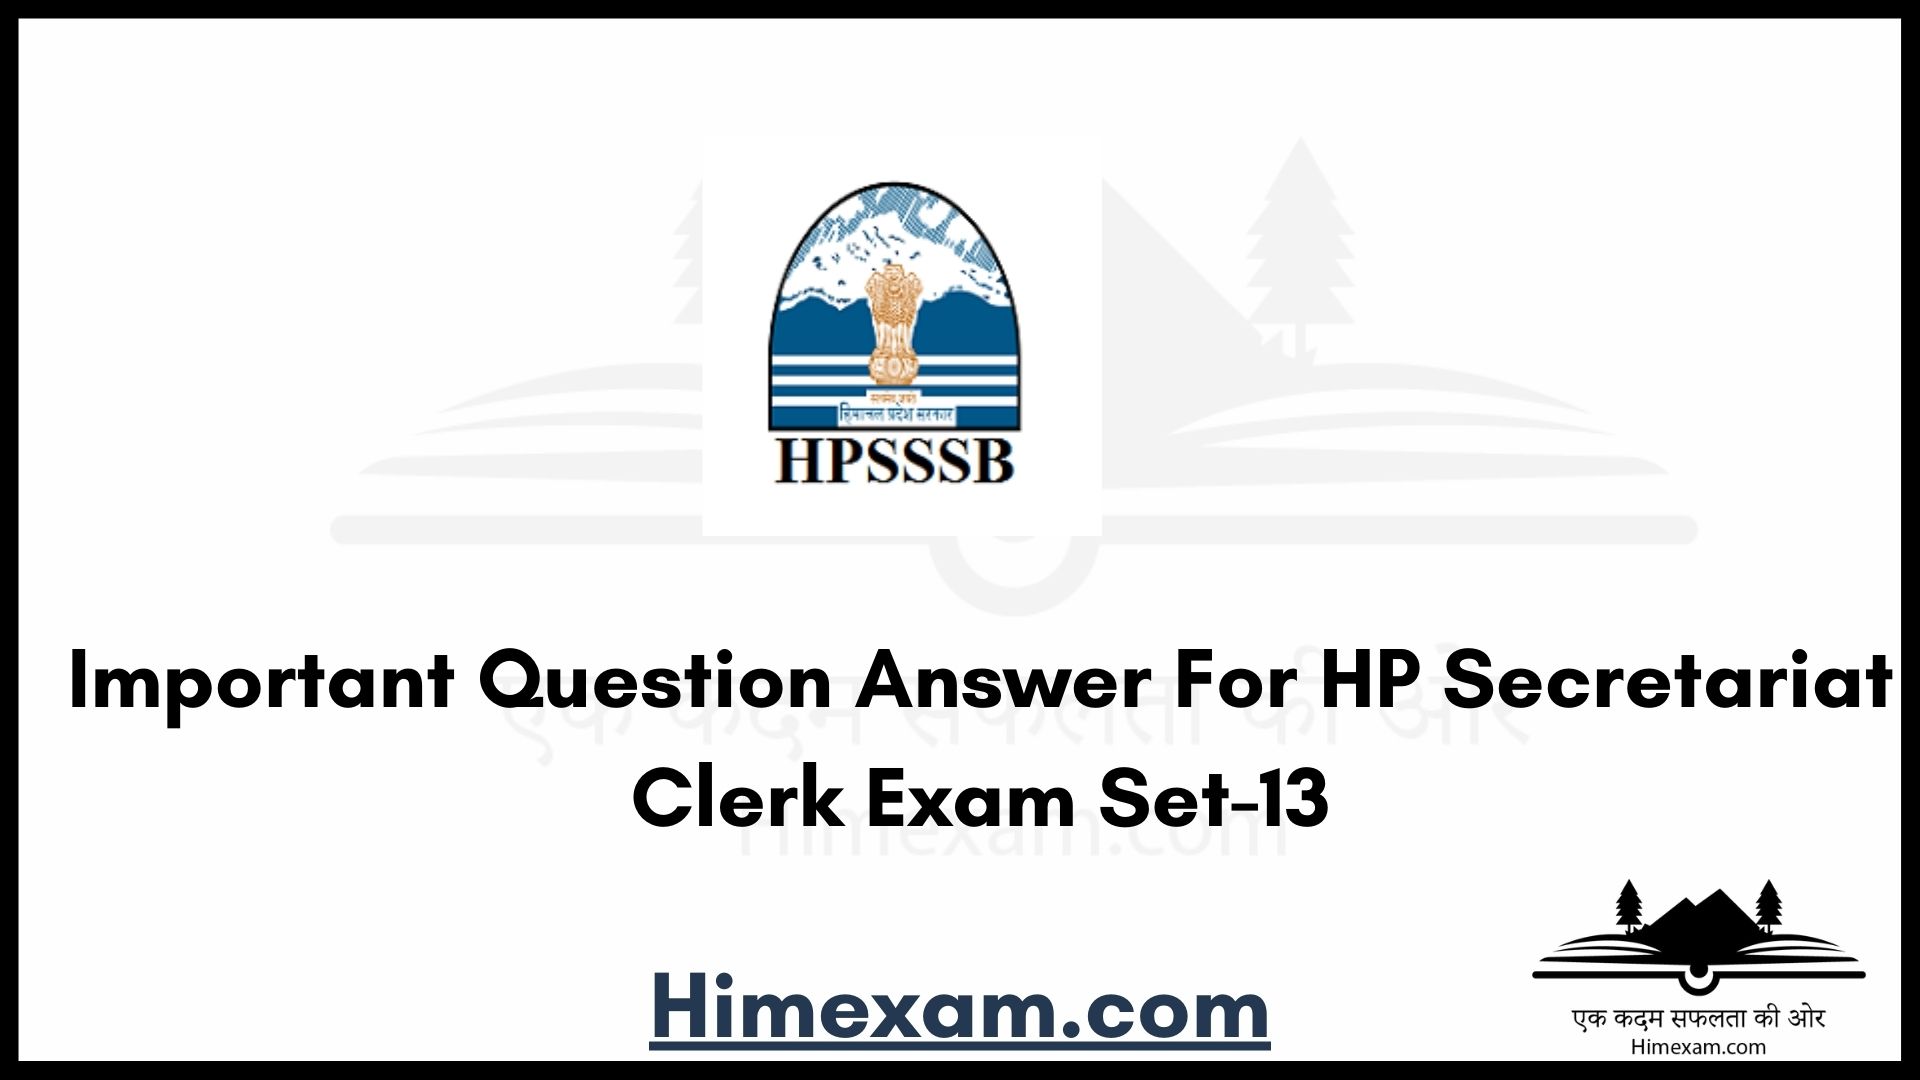 Important Question Answer For HP Secretariat Clerk Exam Set-13